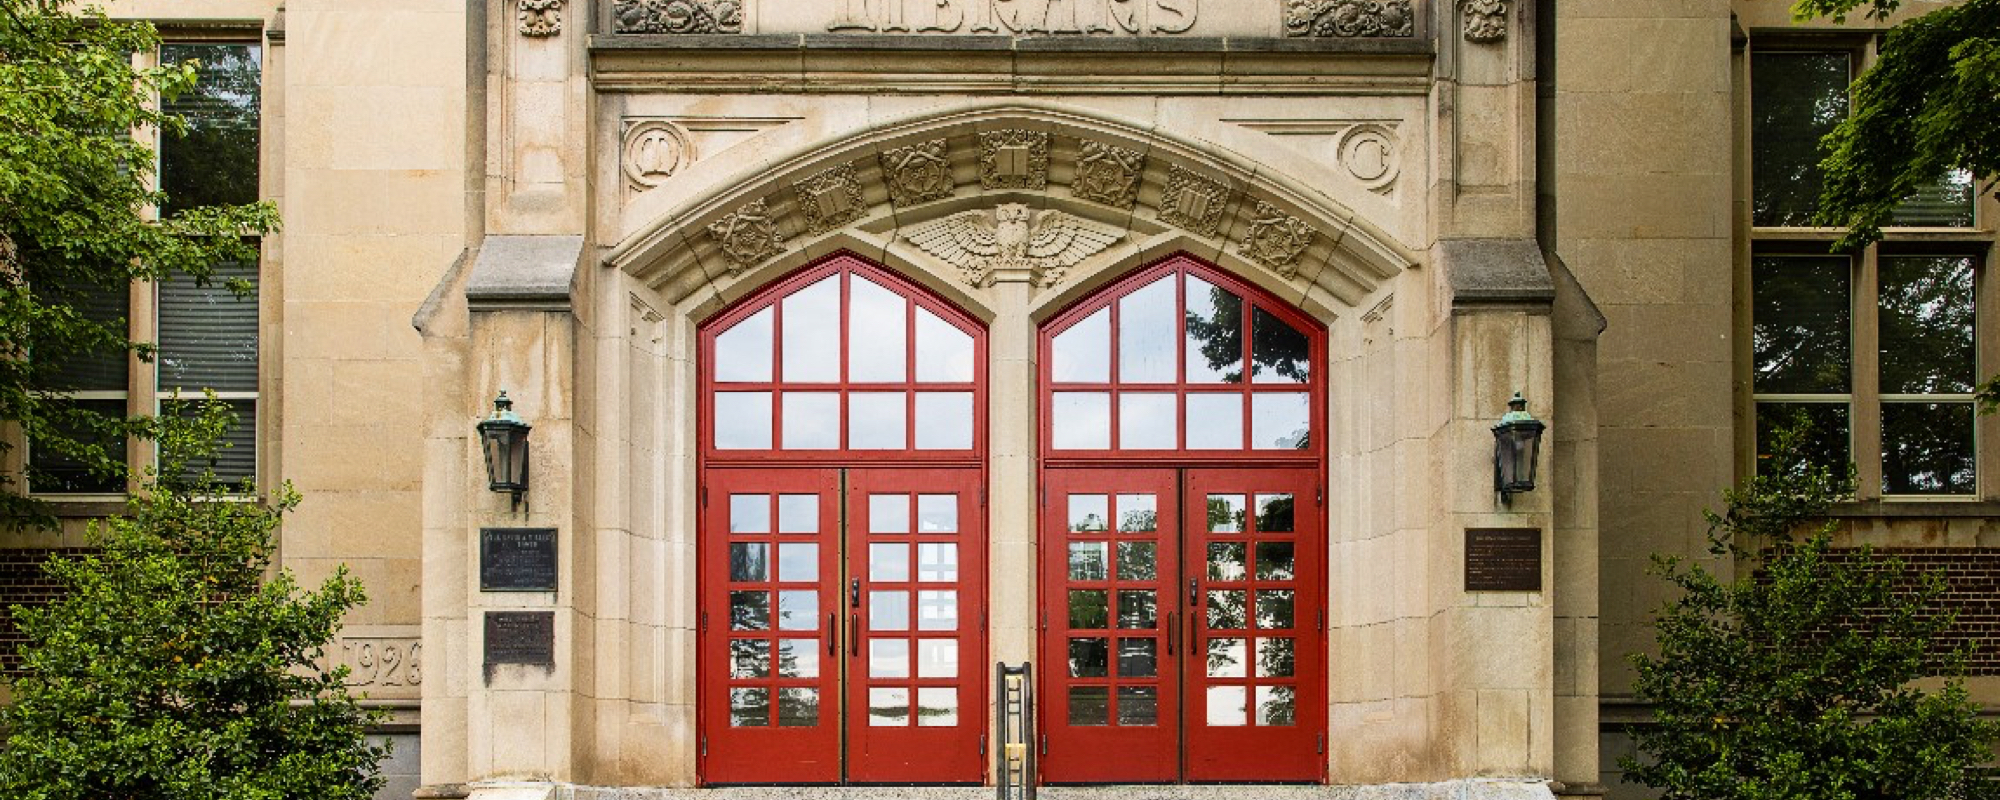 The Muhlenberg Red Doors